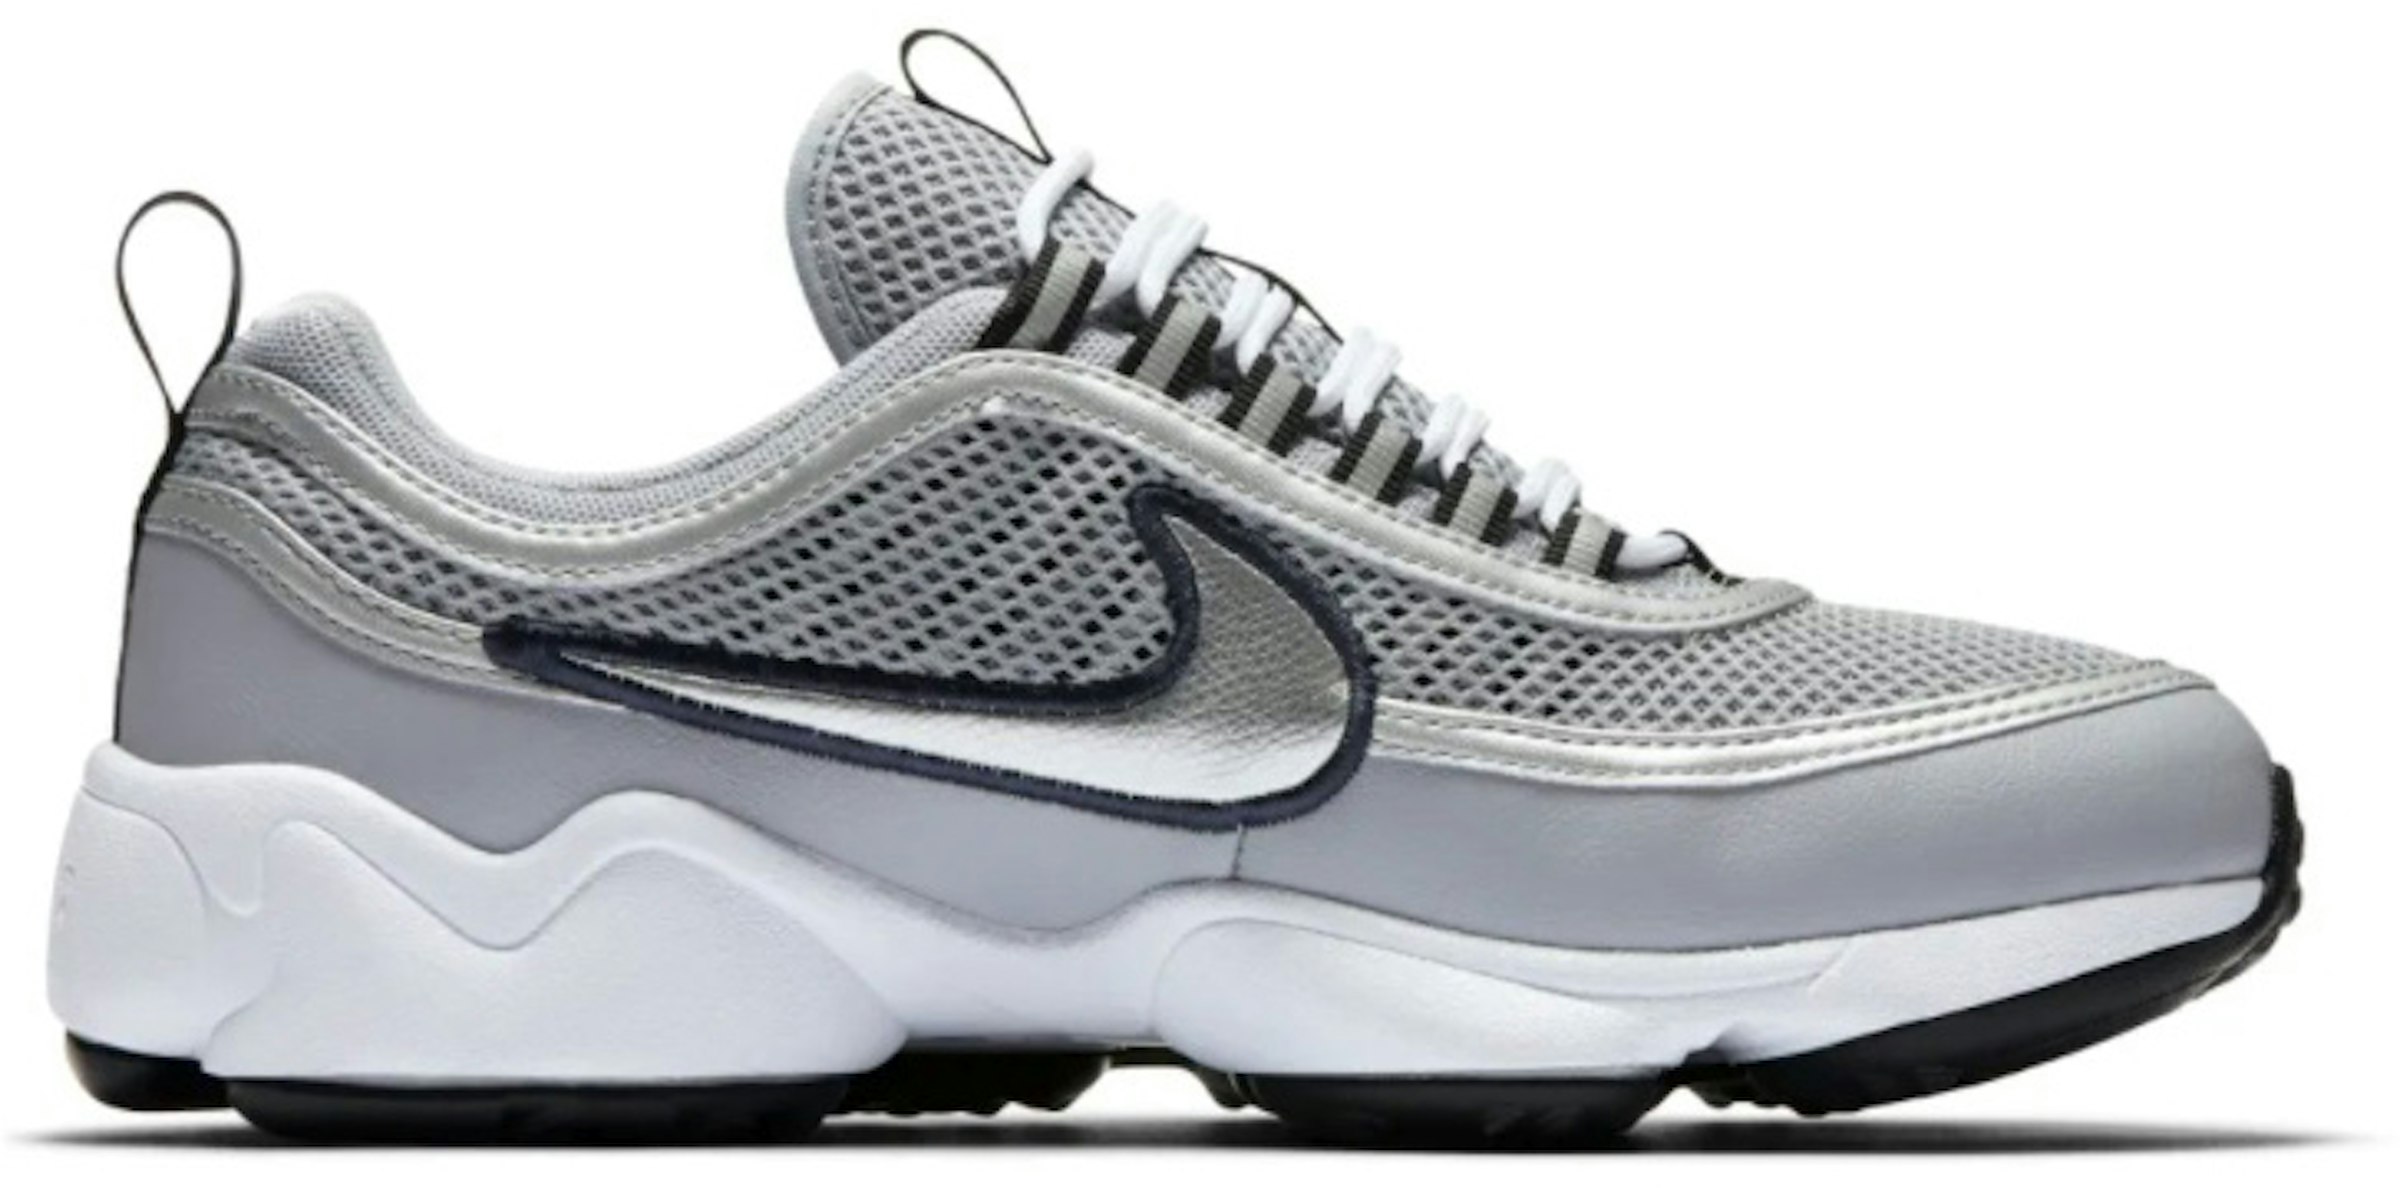 Nike Air Zoom Spiridon Wolf Grey (Women's) - 905221-001 -